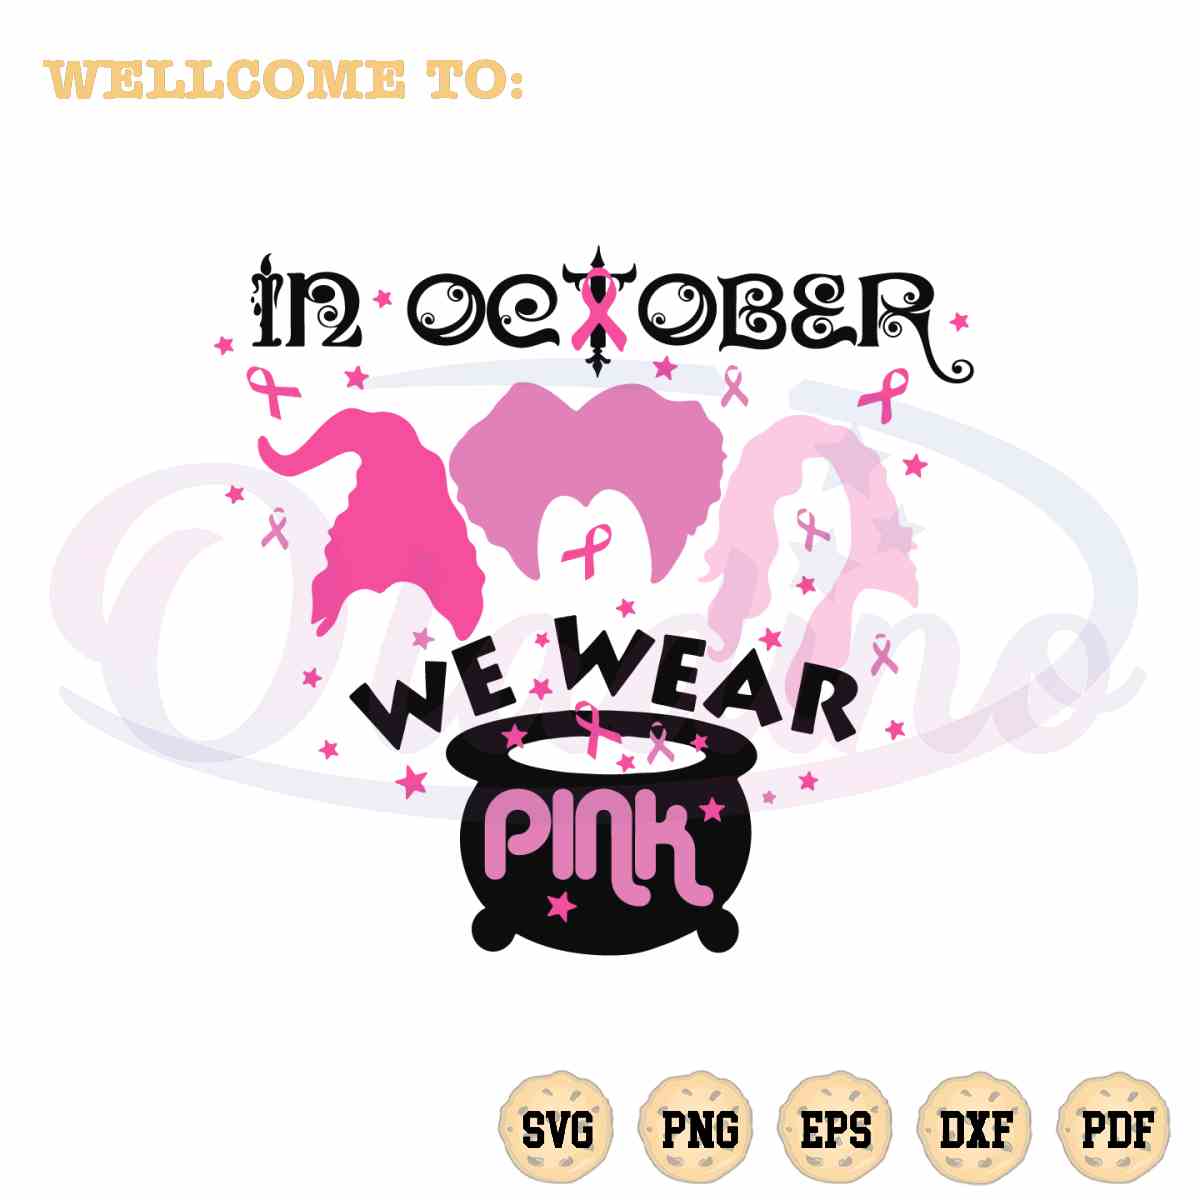 hocus-pocus-in-october-we-wear-pink-svg-files-for-cricut